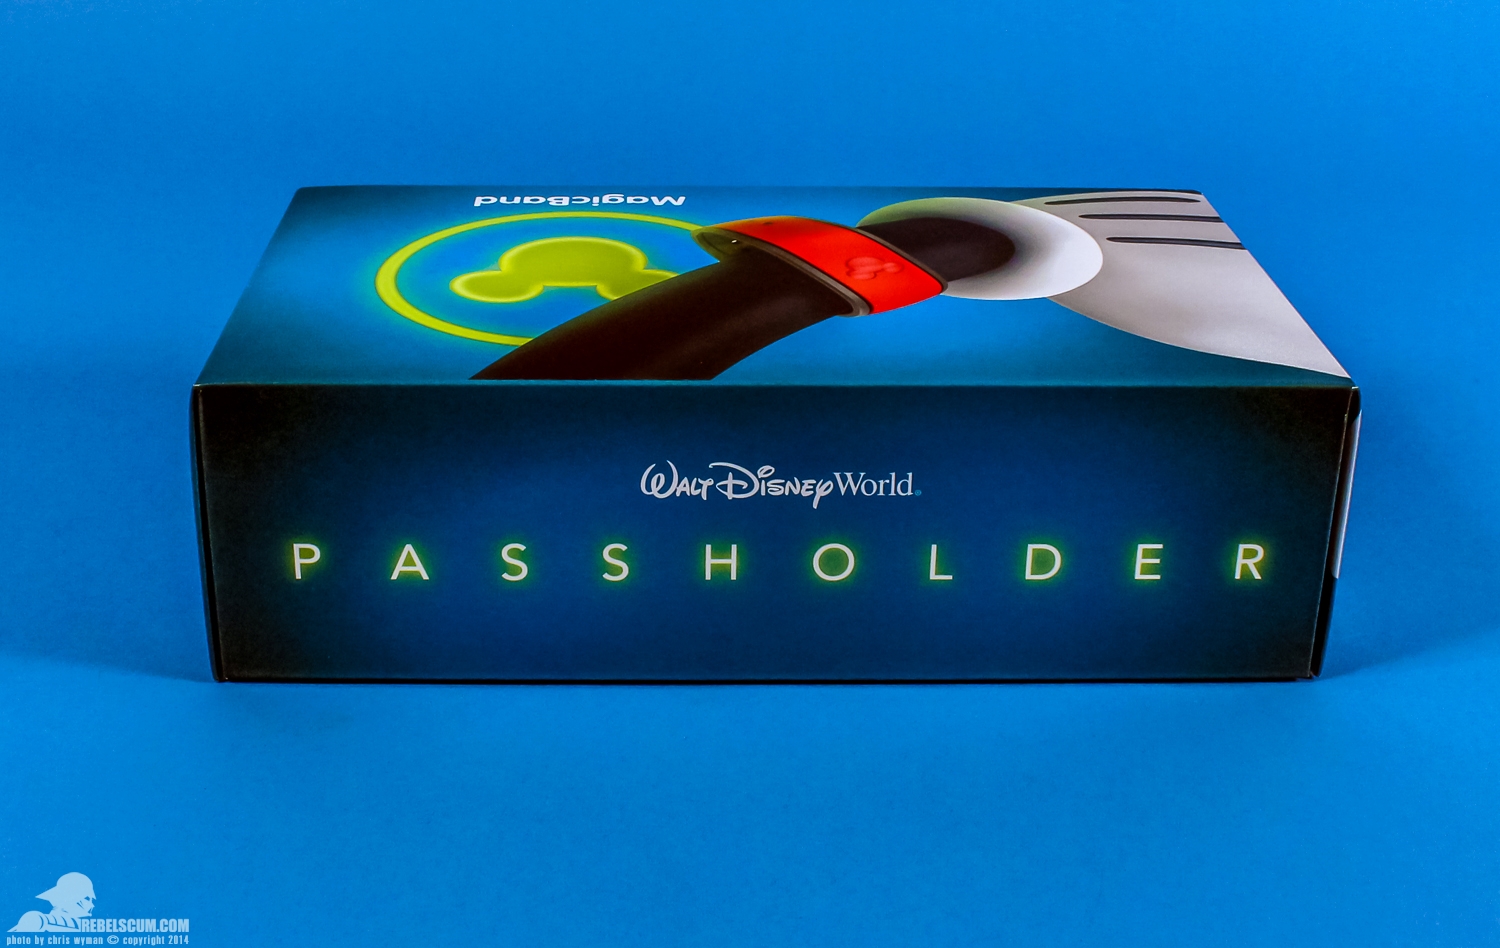 Disney-World-Passholder-MagicBand-006.jpg